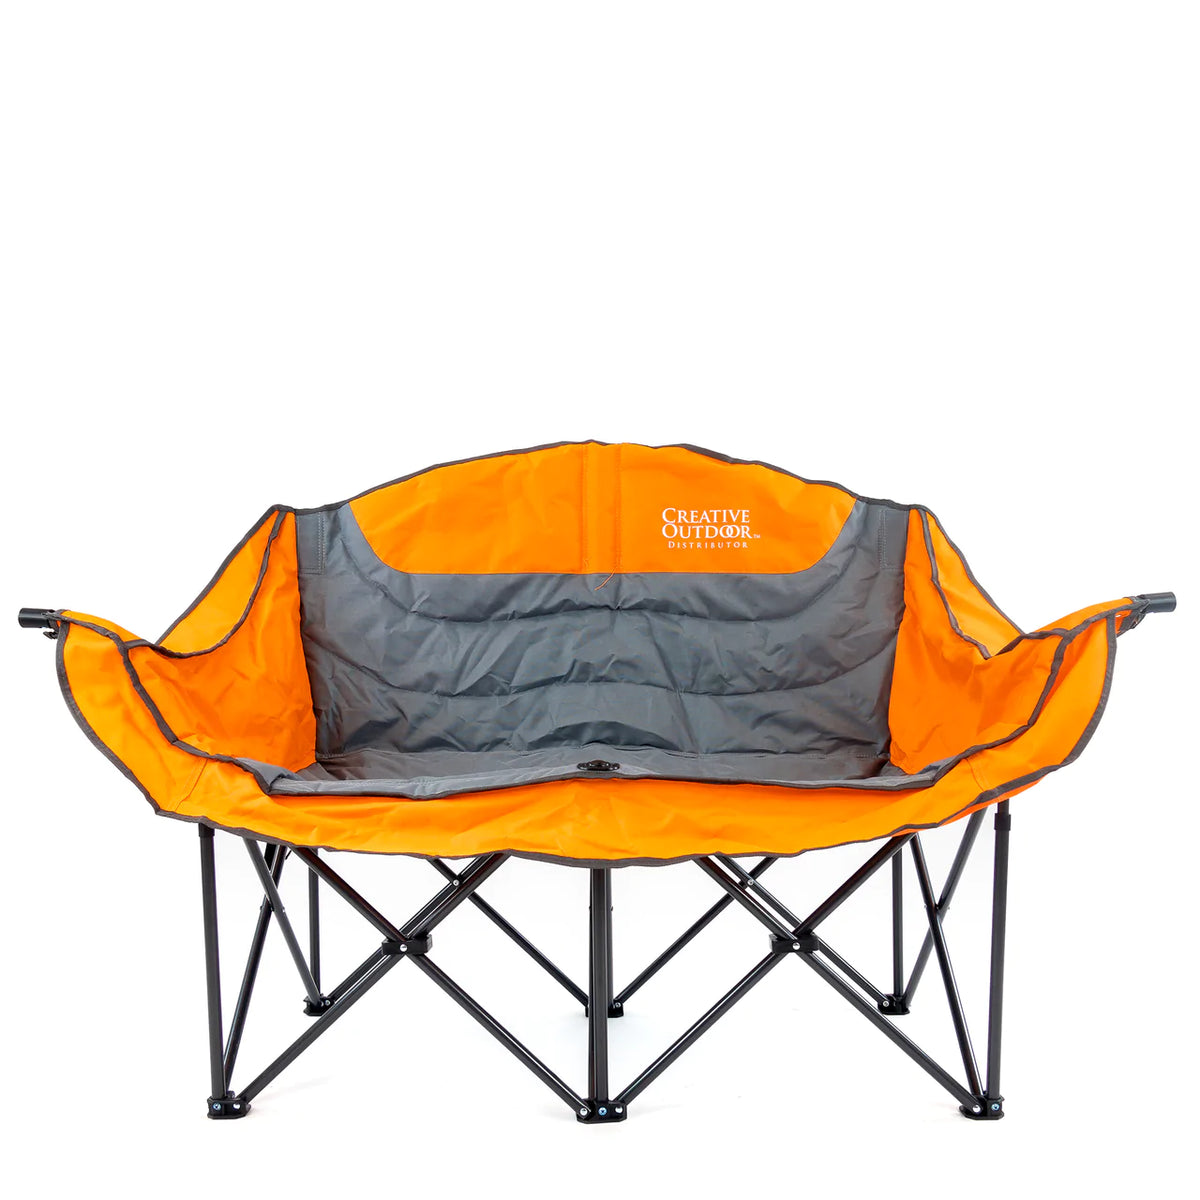 Creative Wagons 812501 Luxury Loveseat Folding Wine Chair Orange New